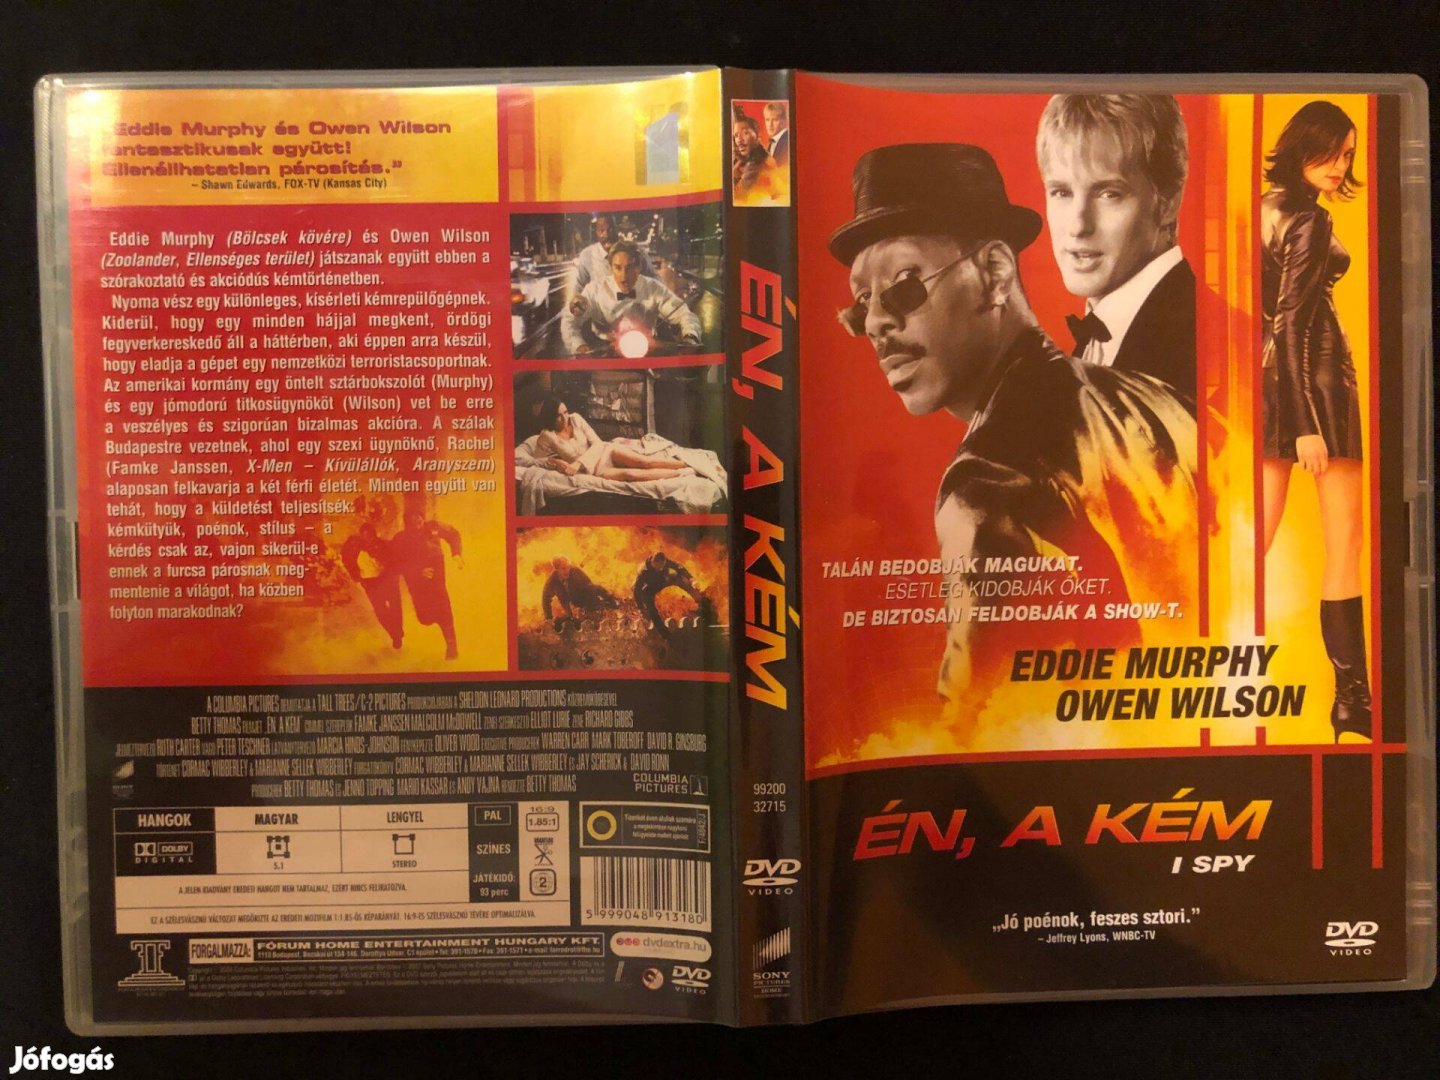 Én, a kém (karcmentes, Eddie Murphy, Owen Wilson) DVD